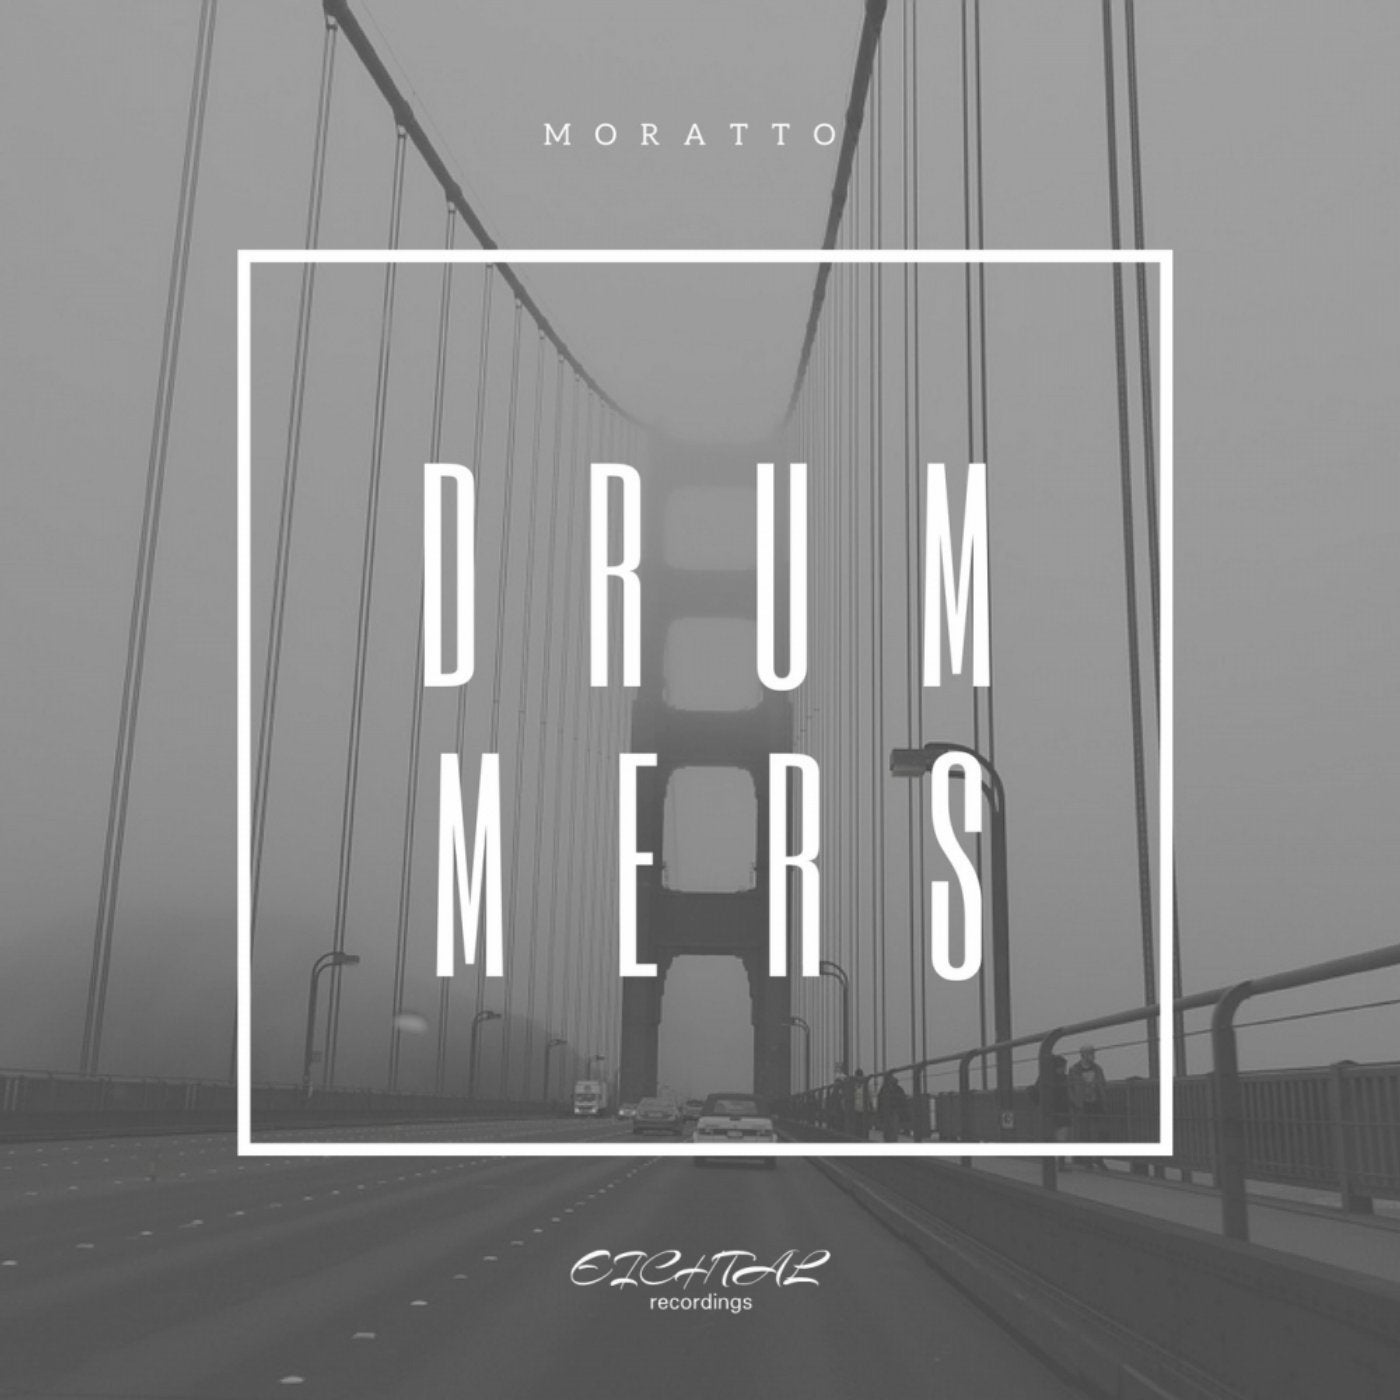 Drummers